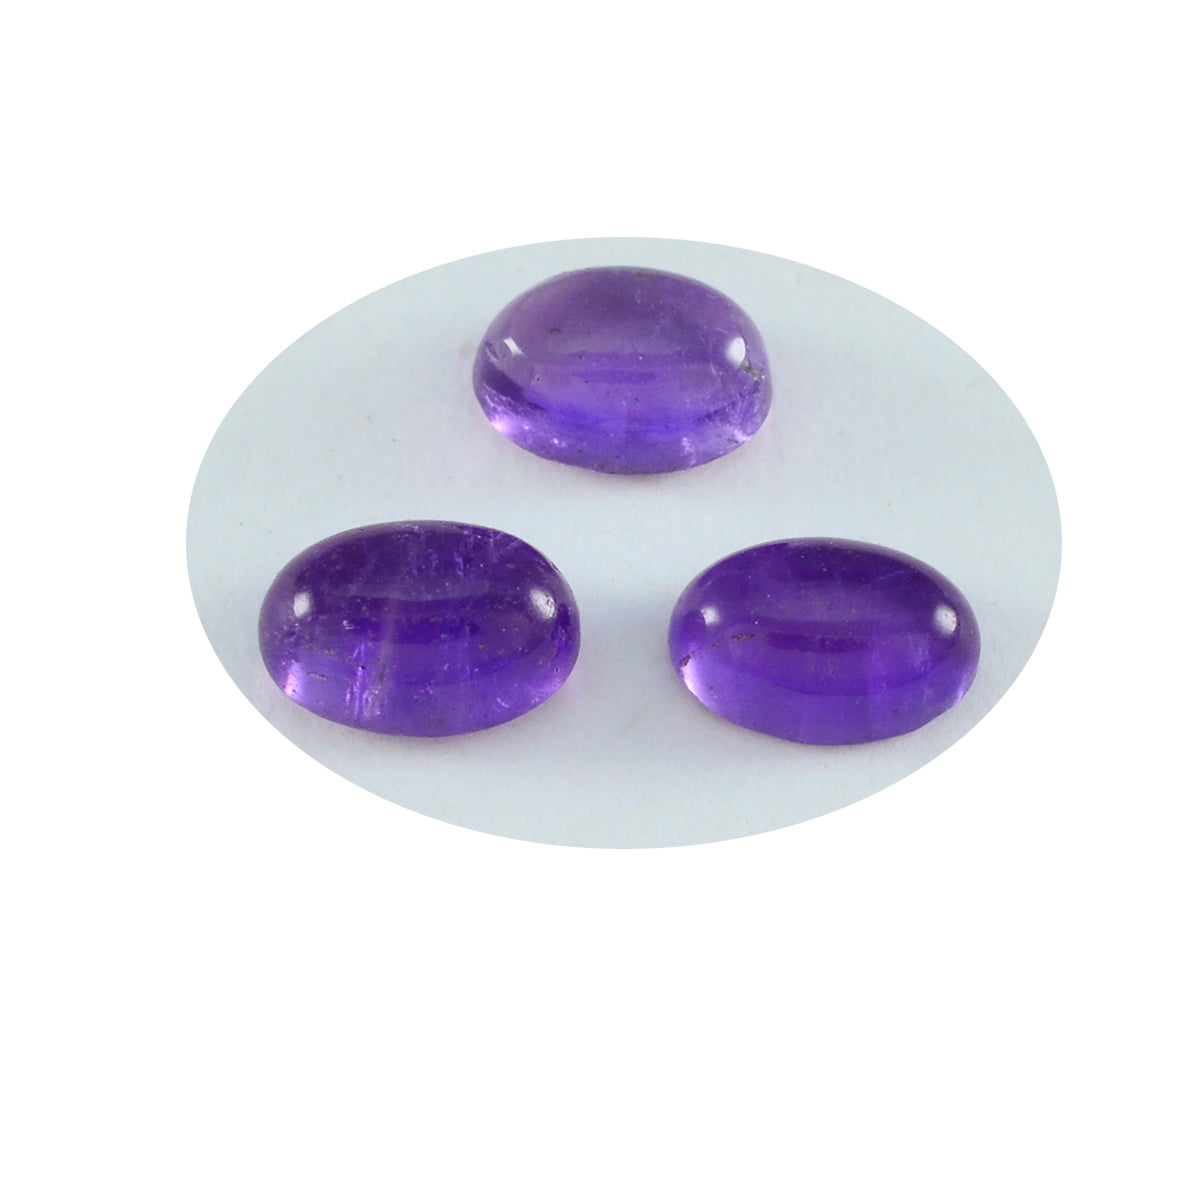 Riyogems 1 Stück lila Amethyst-Cabochon, 6 x 8 mm, ovale Form, wunderschöner, hochwertiger, loser Edelstein